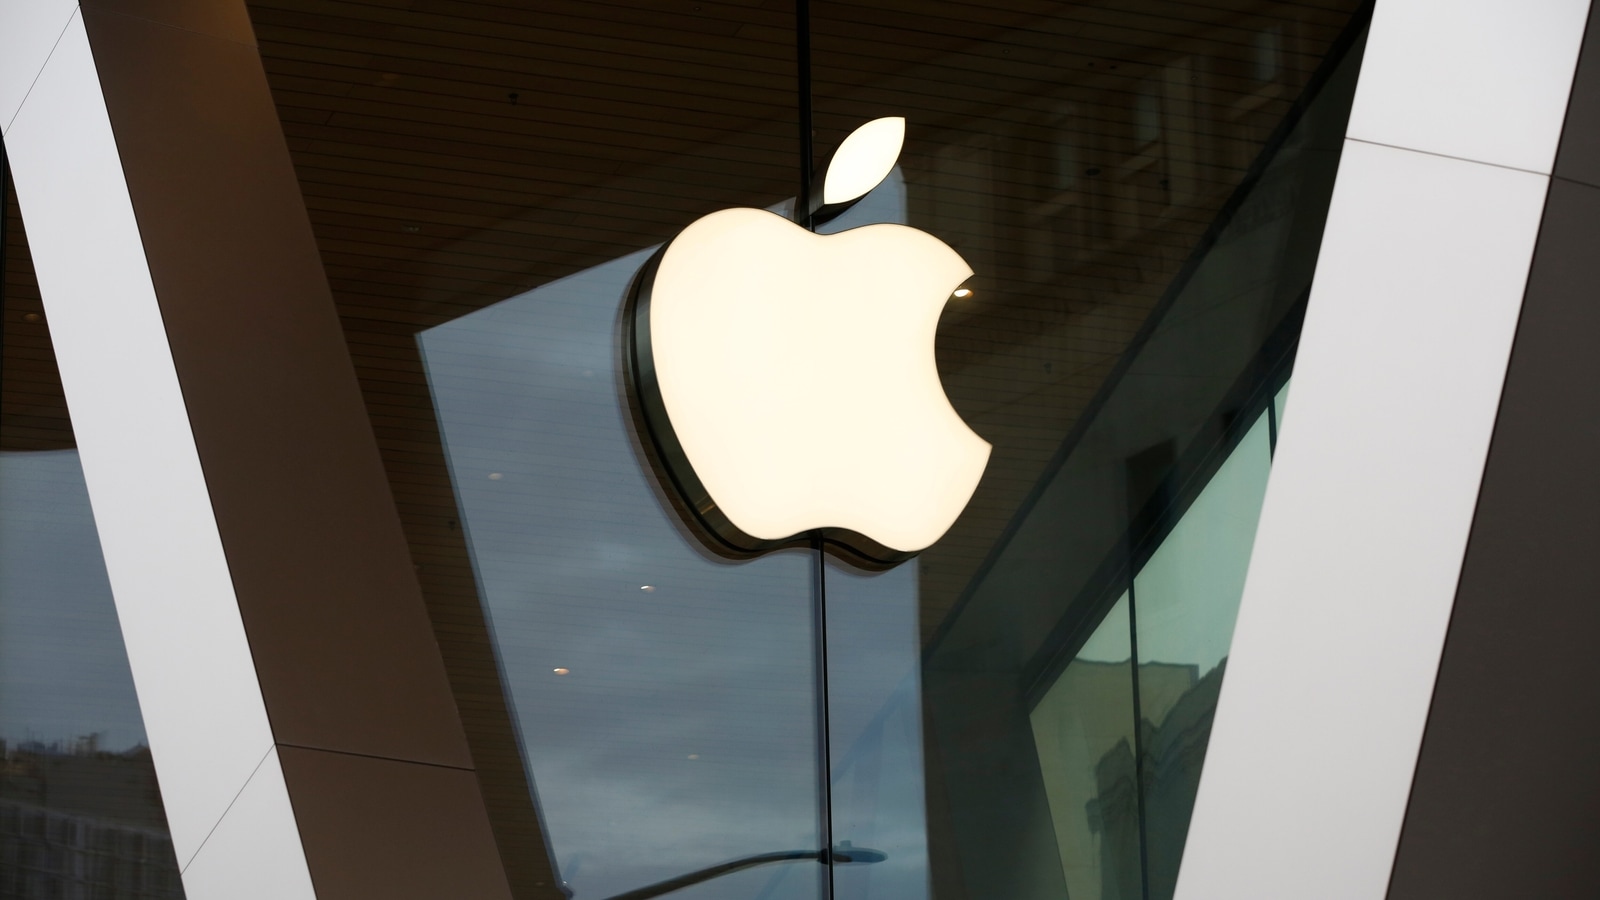 Apple retreats in combat to guard App Store in Europe